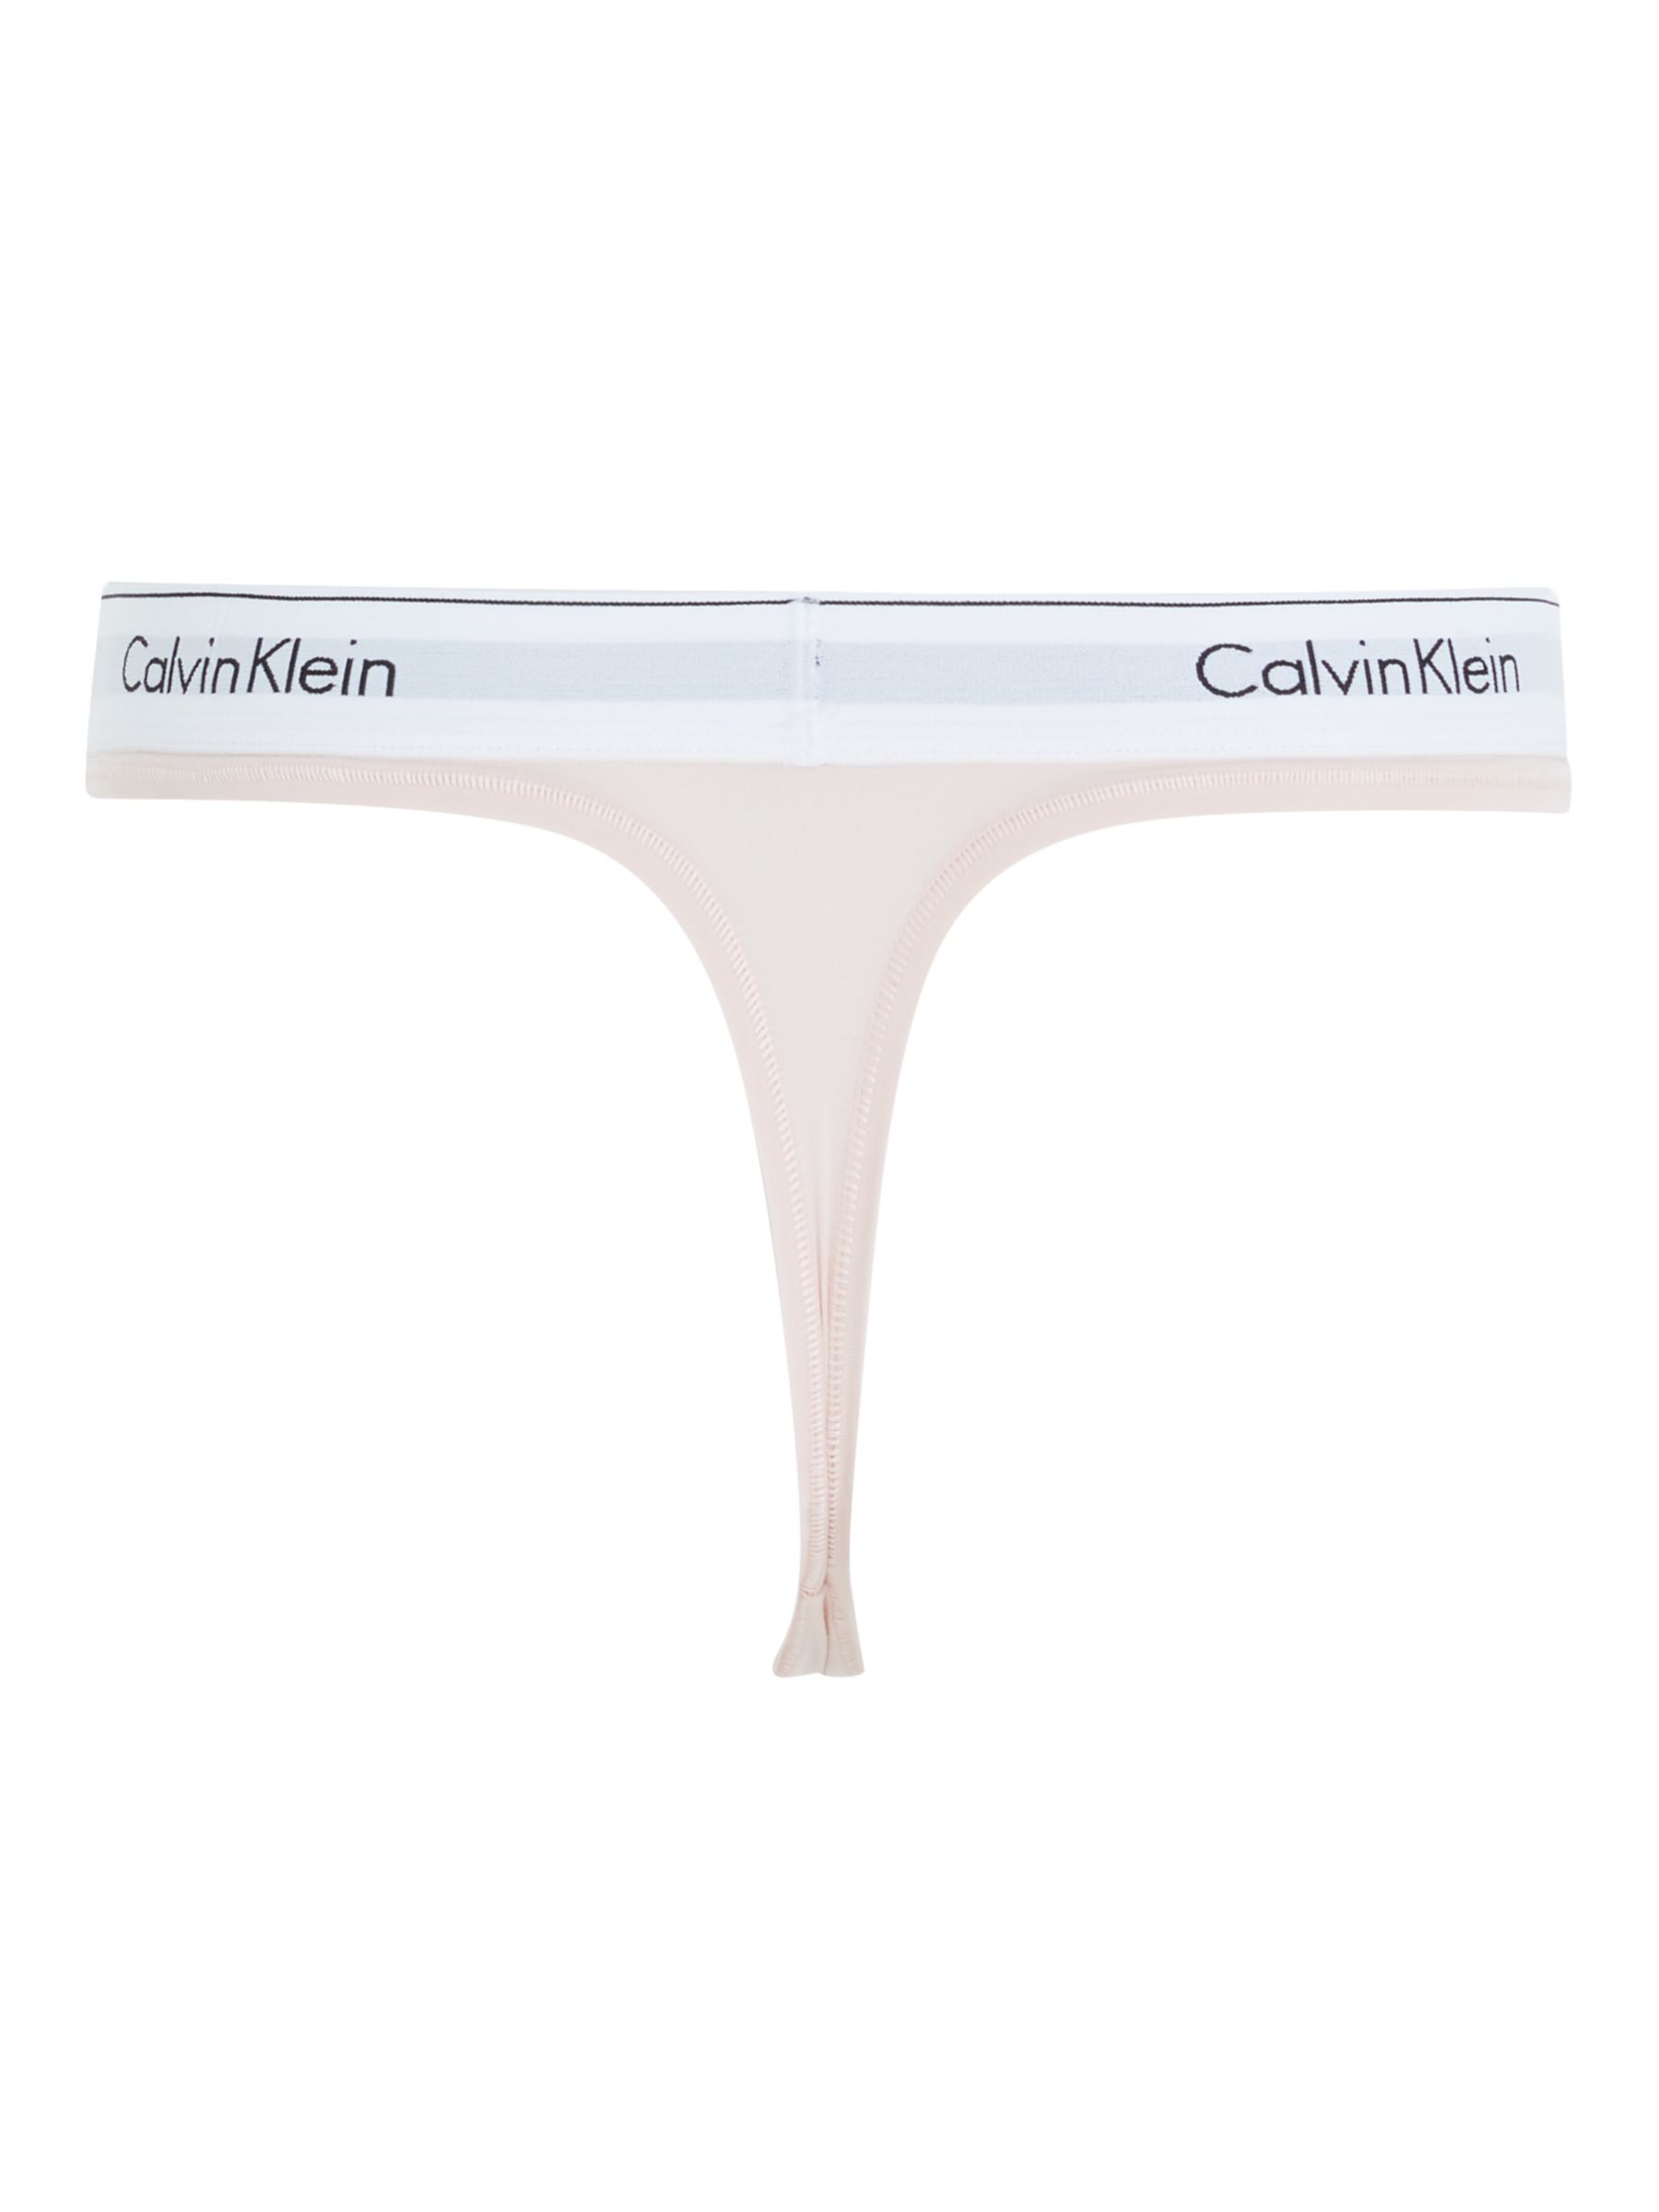 Calvin Klein 3 Pack Cotton Thongs Size: Large / UK 14 Red/White/Pink